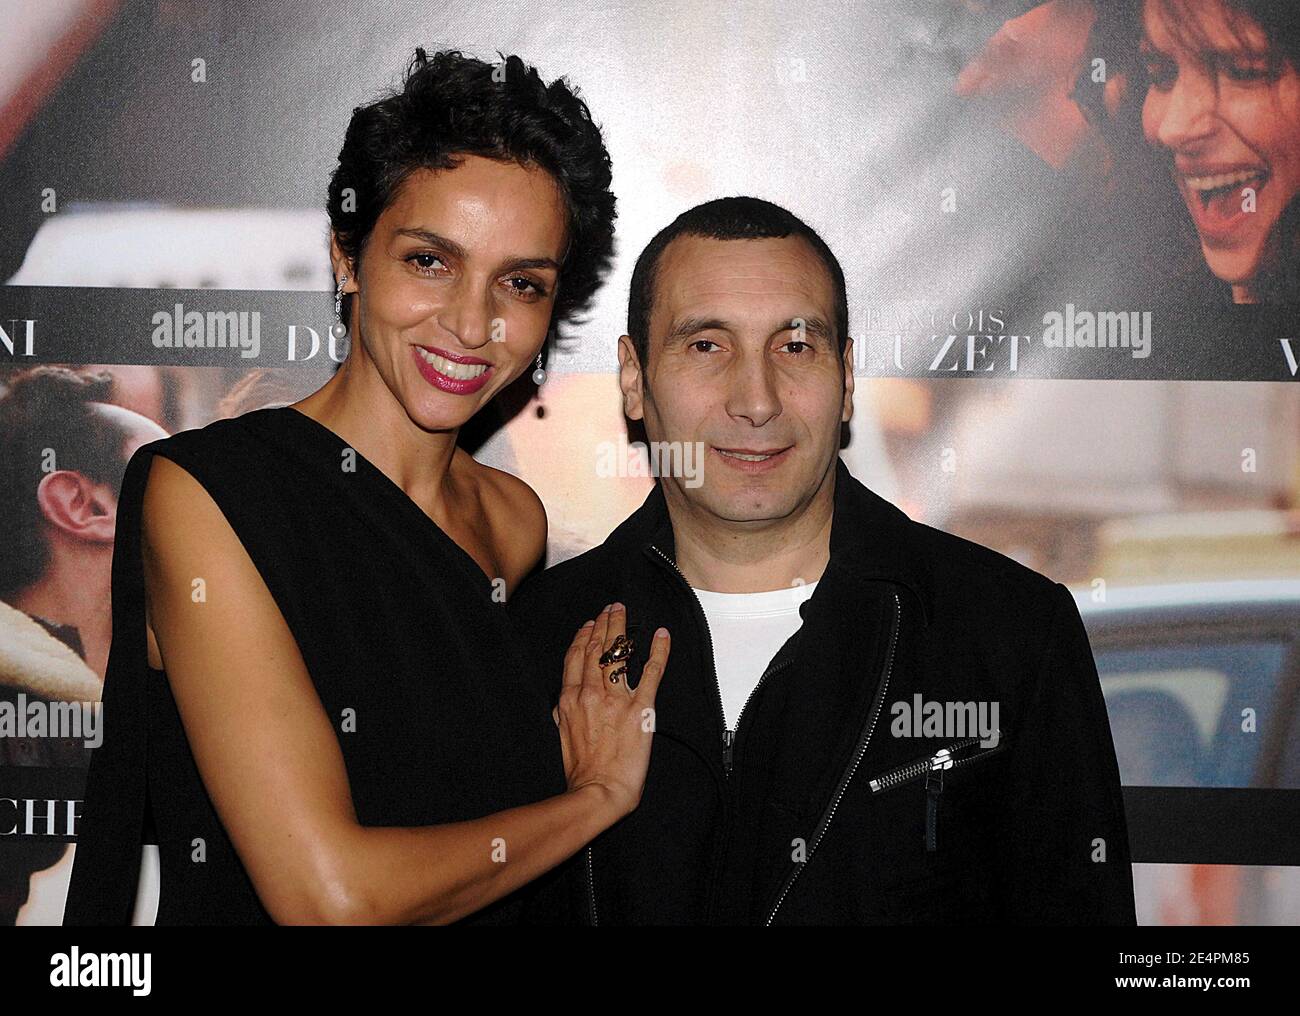 Zinedine Soualem and Farida Khelfa attend the premiere of 'Paris' held at the UGC Normandy in Paris, France on February 11, 2008 . Photo by Giancarlo Gorassini/ABACAPRESS.COM Stock Photo